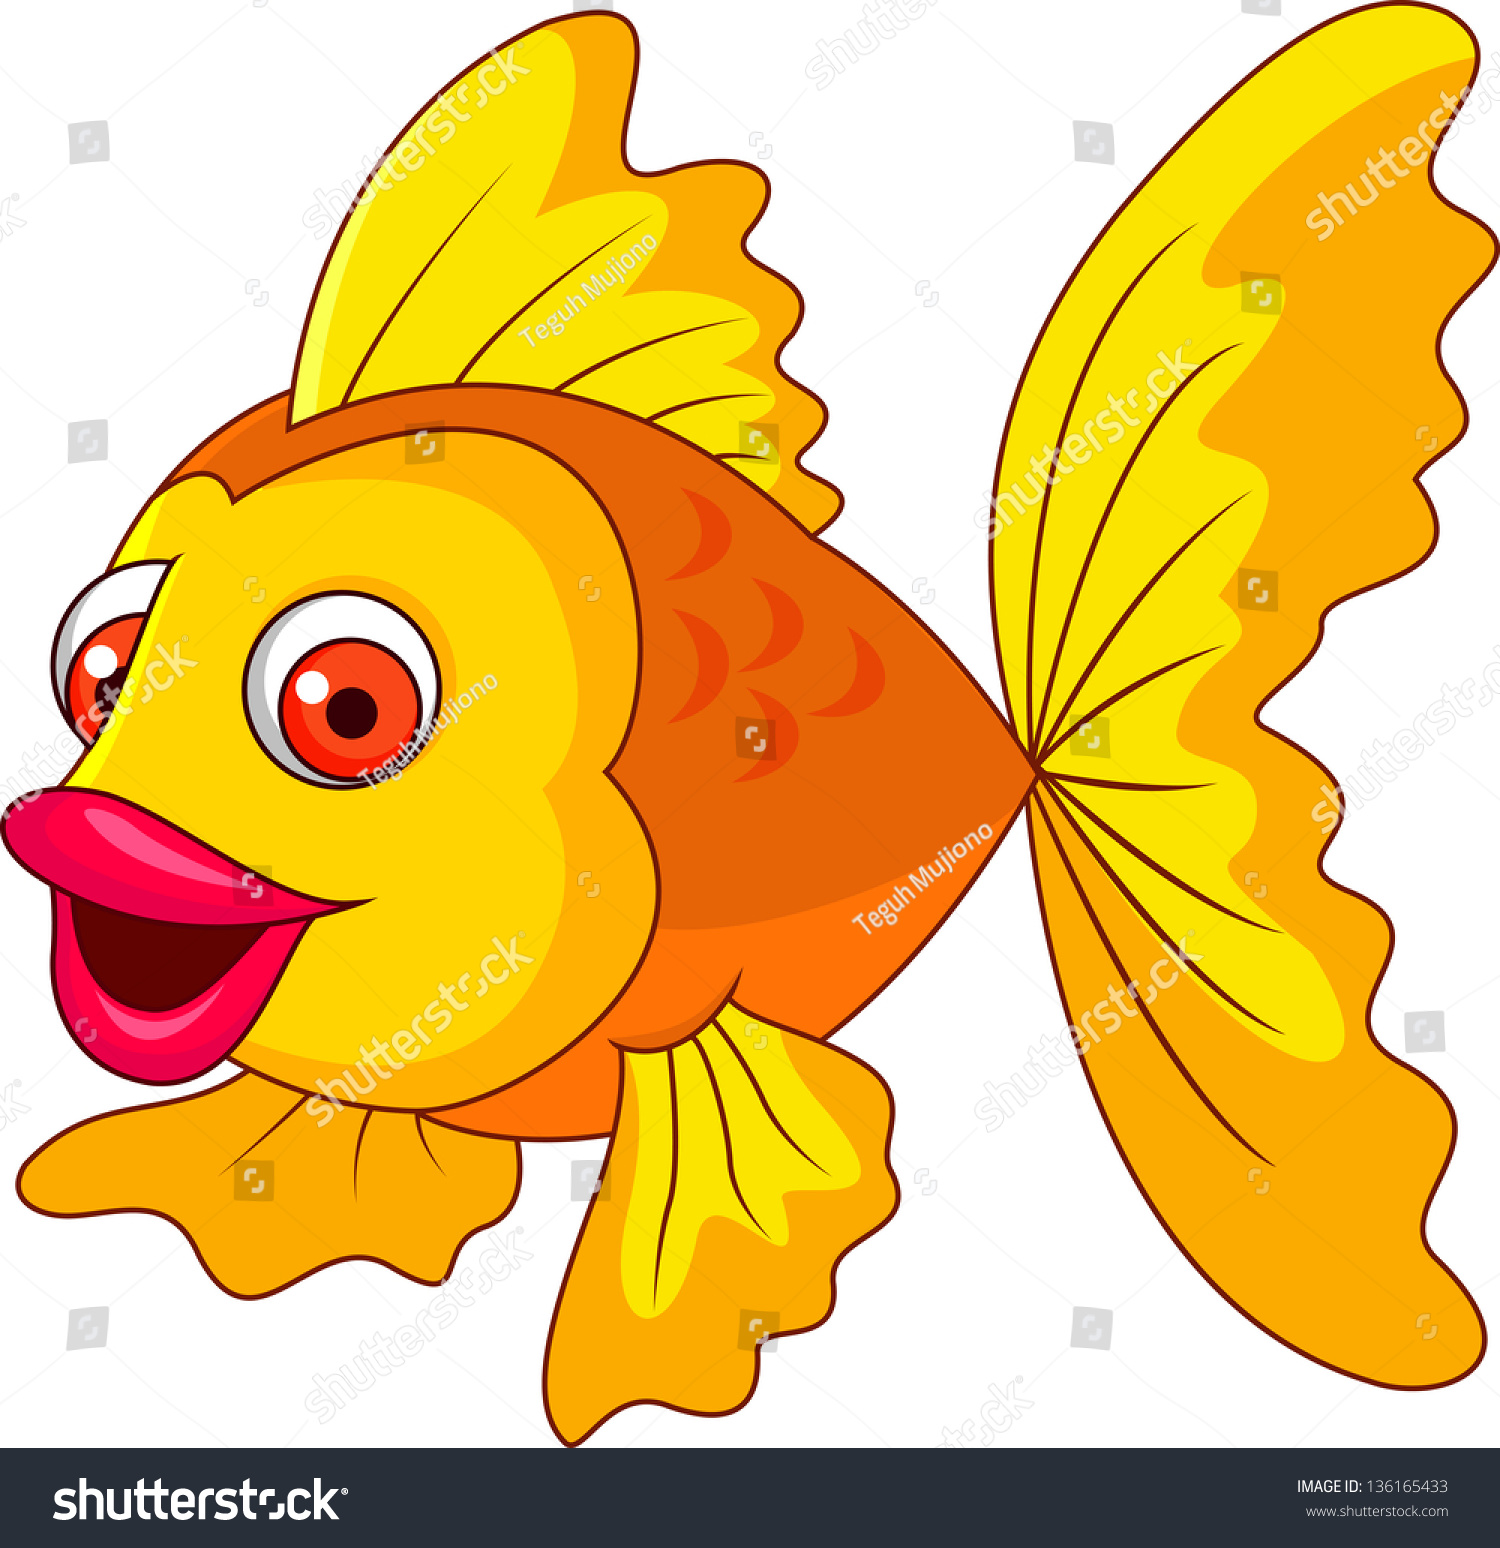 Cute Golden Fish Cartoon Stock Vector 136165433 - Shutterstock